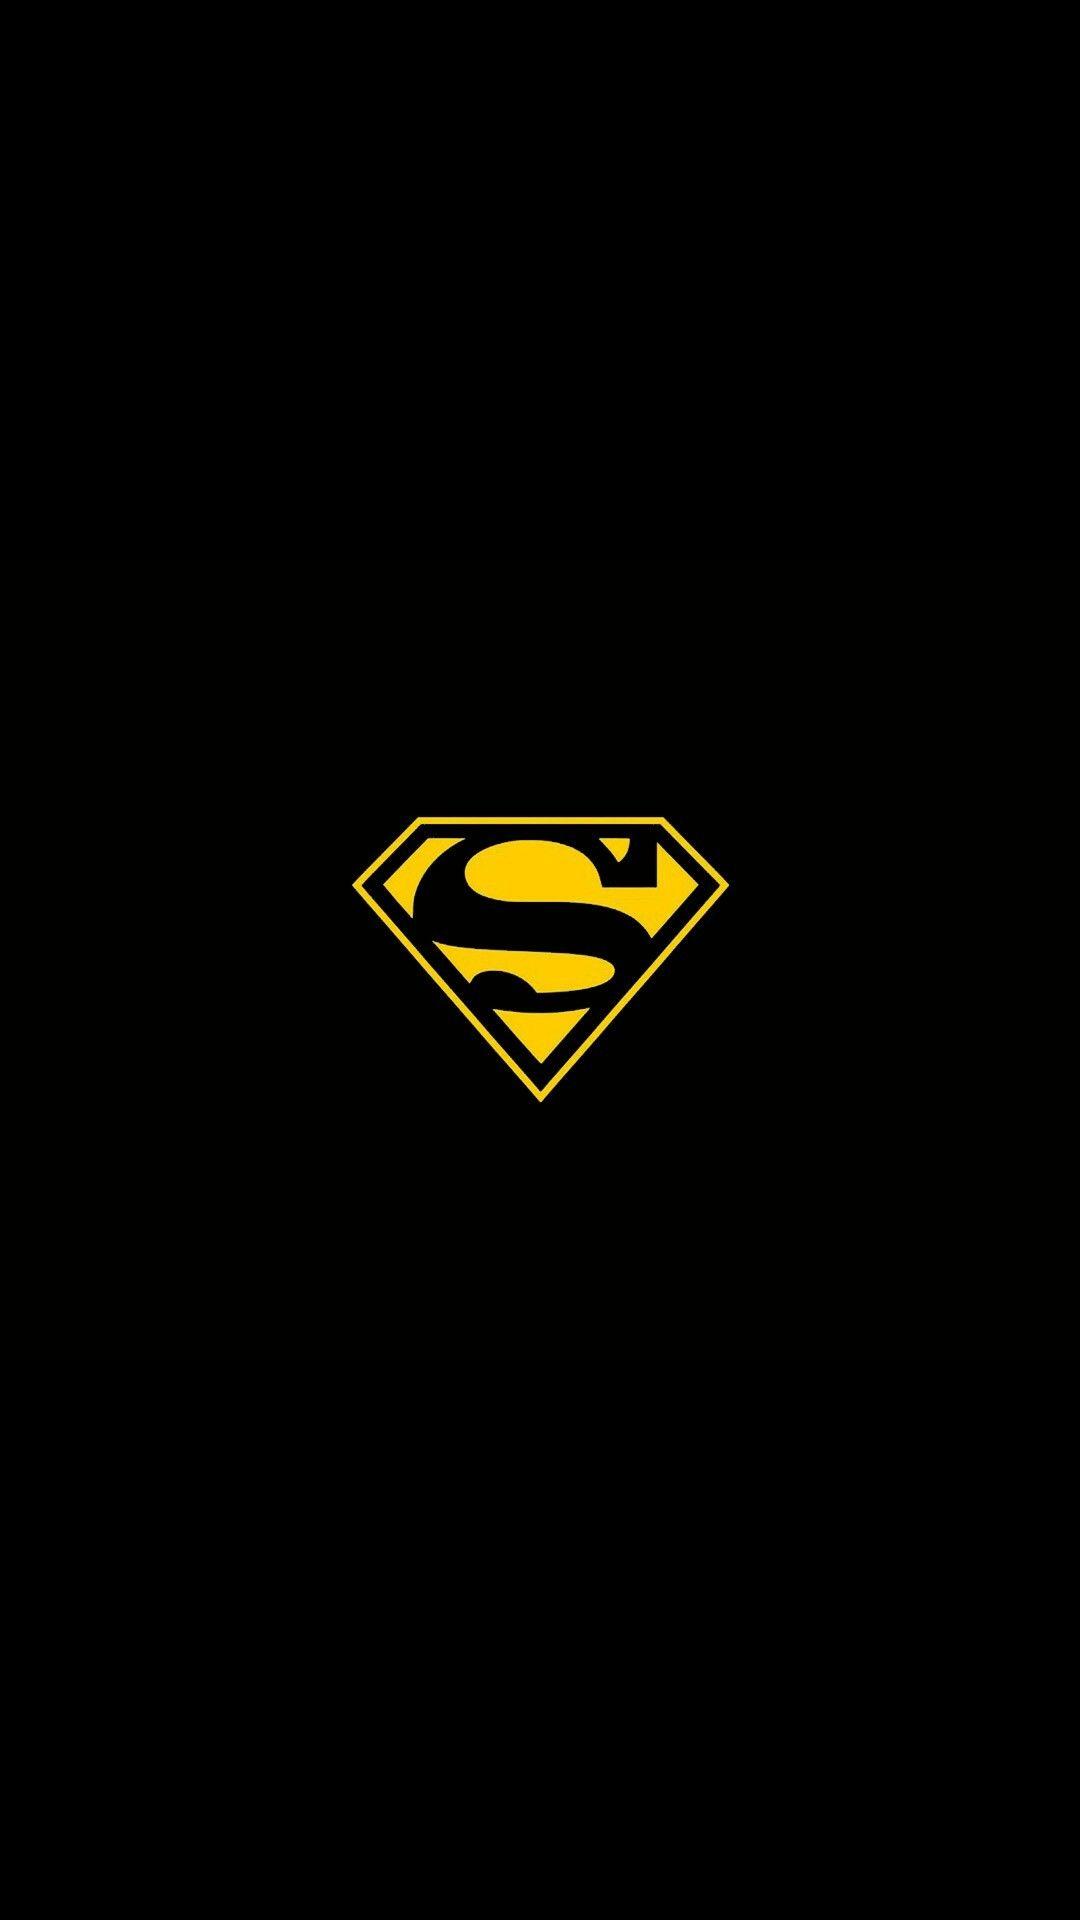 Superman Symbol iPhone Wallpaper Free Superman Symbol